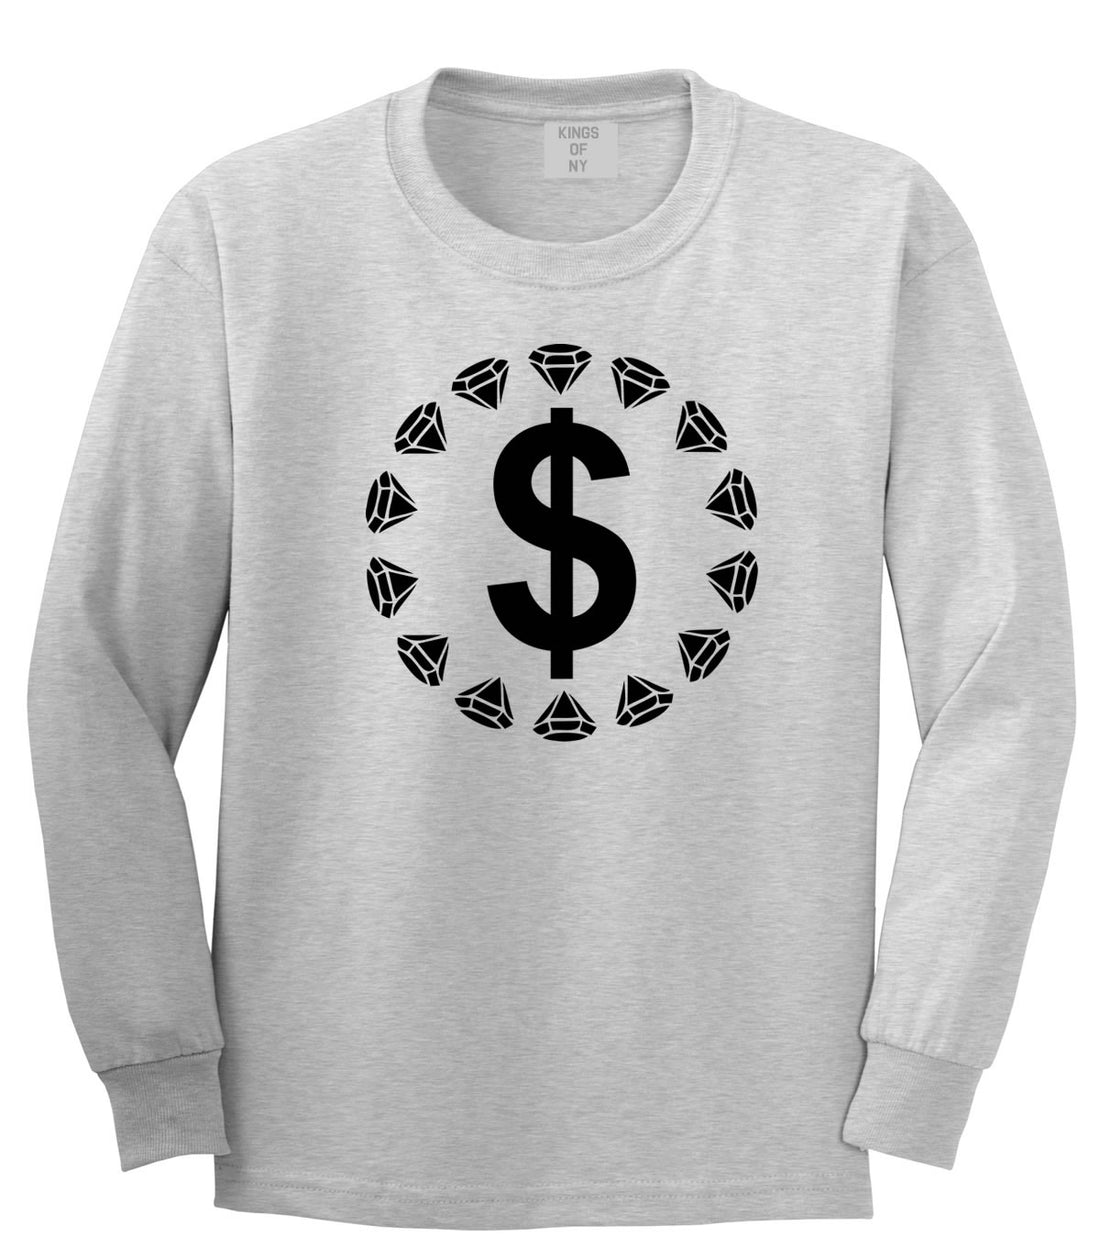 Diamonds Money Sign Logo Boys Kids Long Sleeve T-Shirt in Grey by Kings Of NY